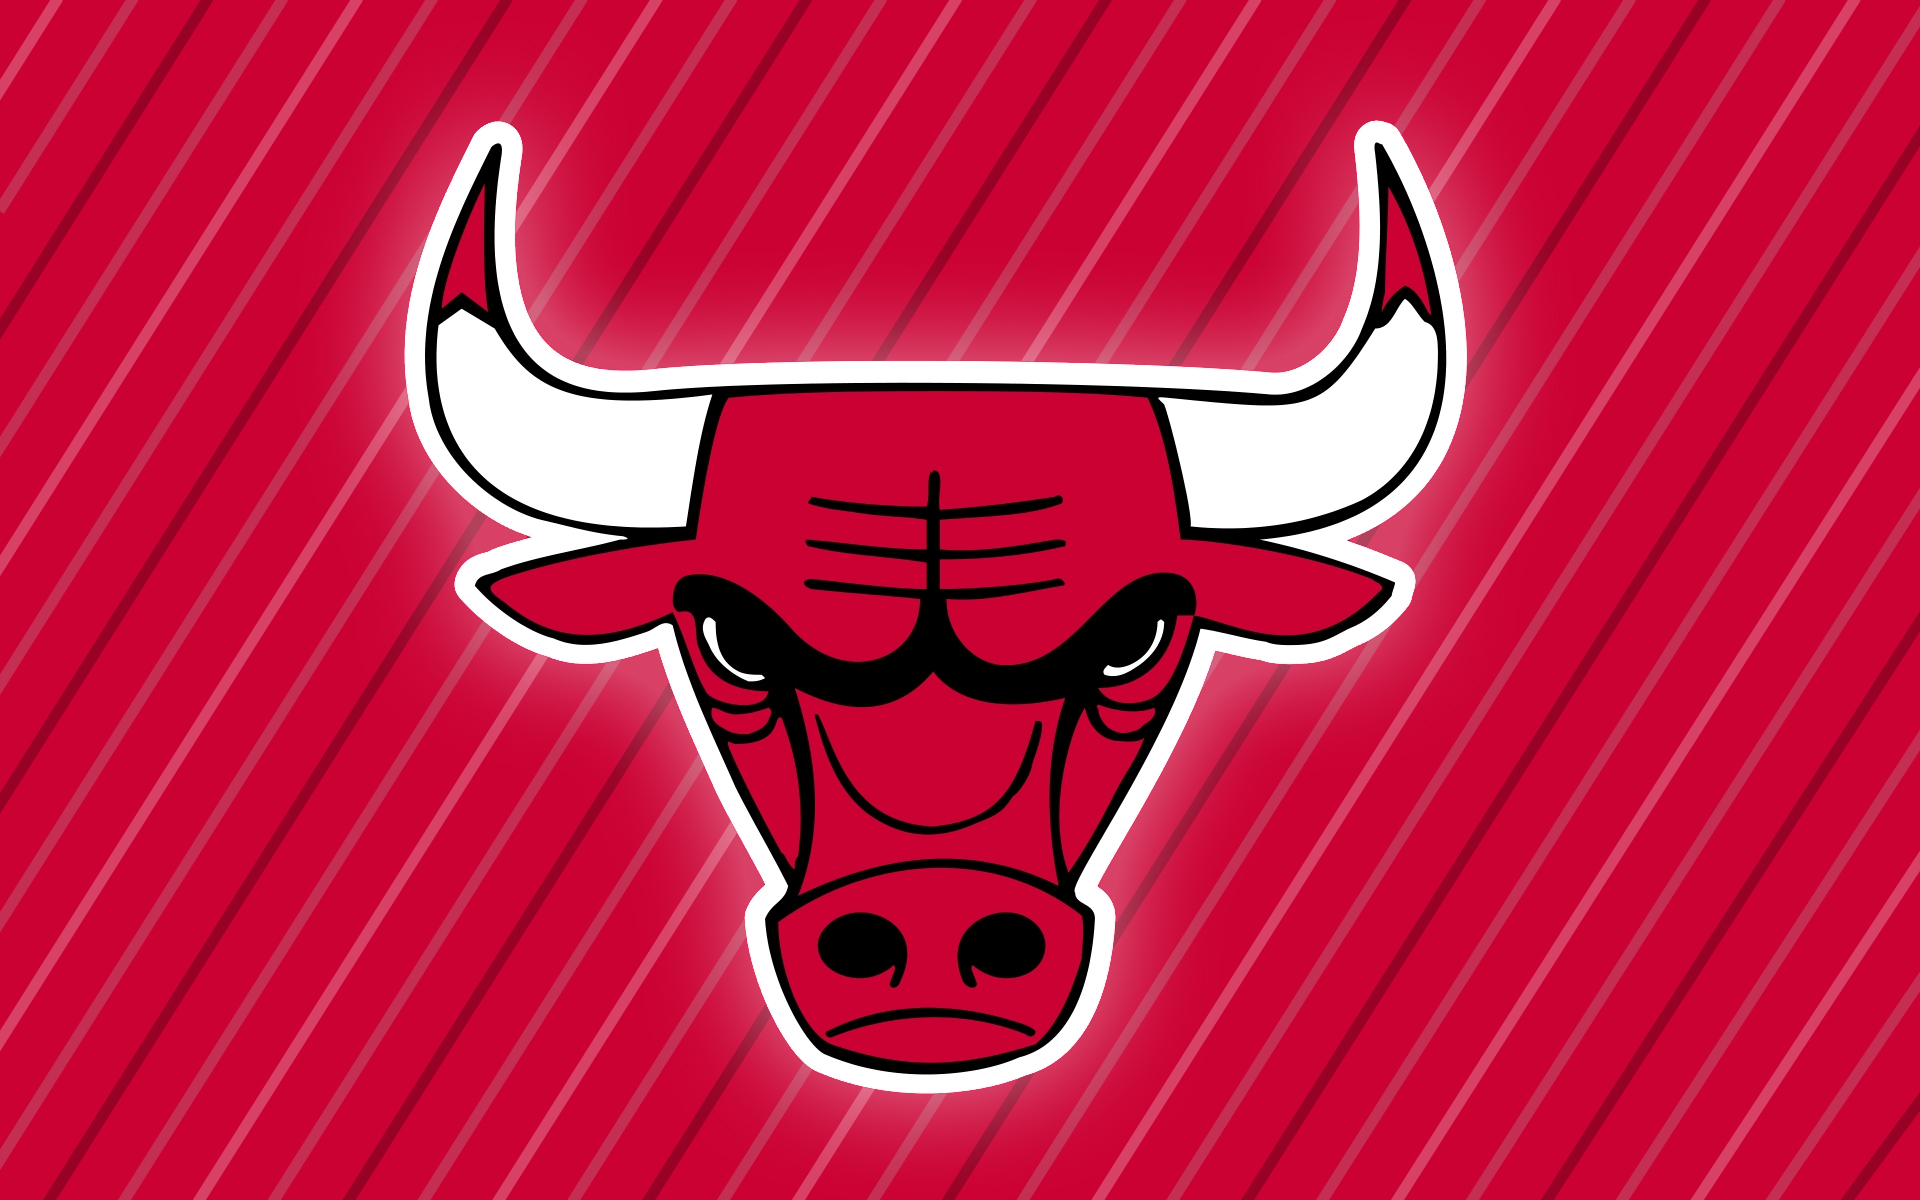 xoaqwepo: chicago bulls logo wallpaper